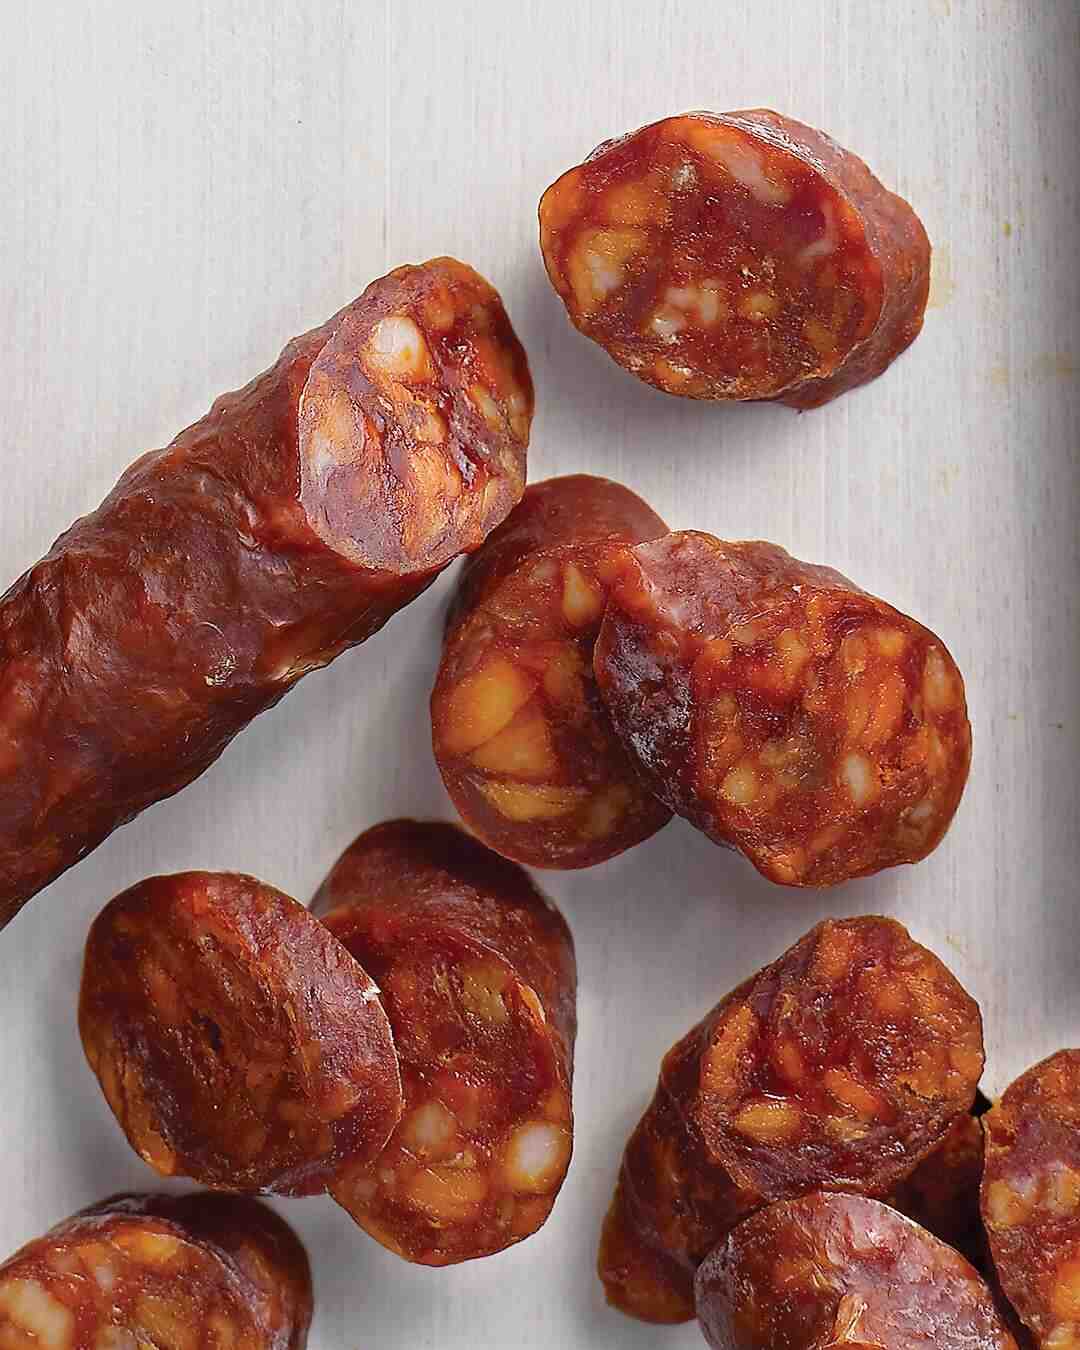 Is chorizo healthier than bacon?